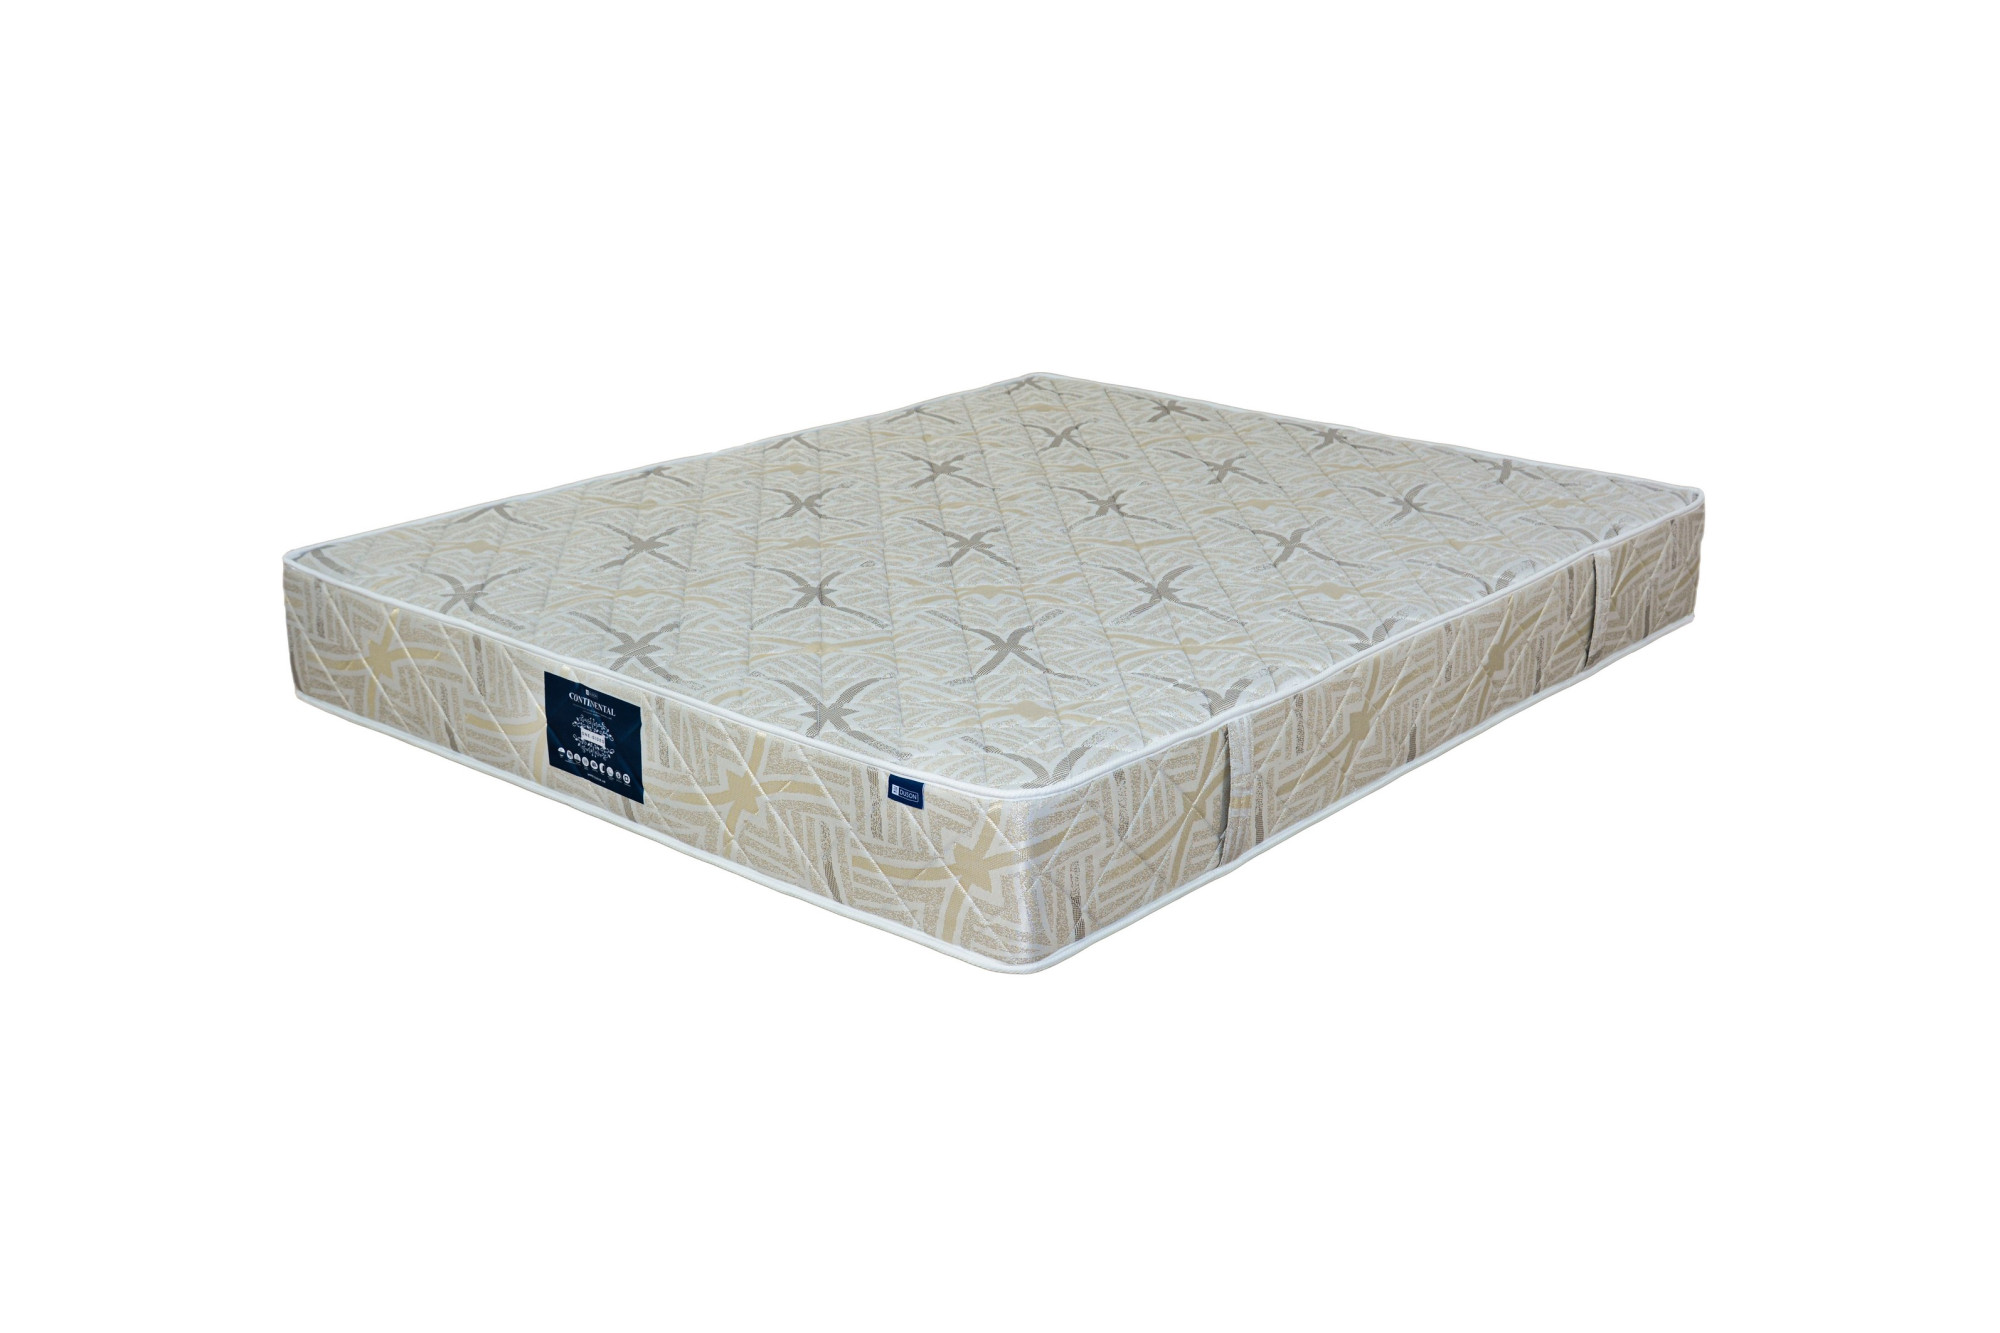 Orthopedic mattress Continental One-sided 180x200 soft, 25cm